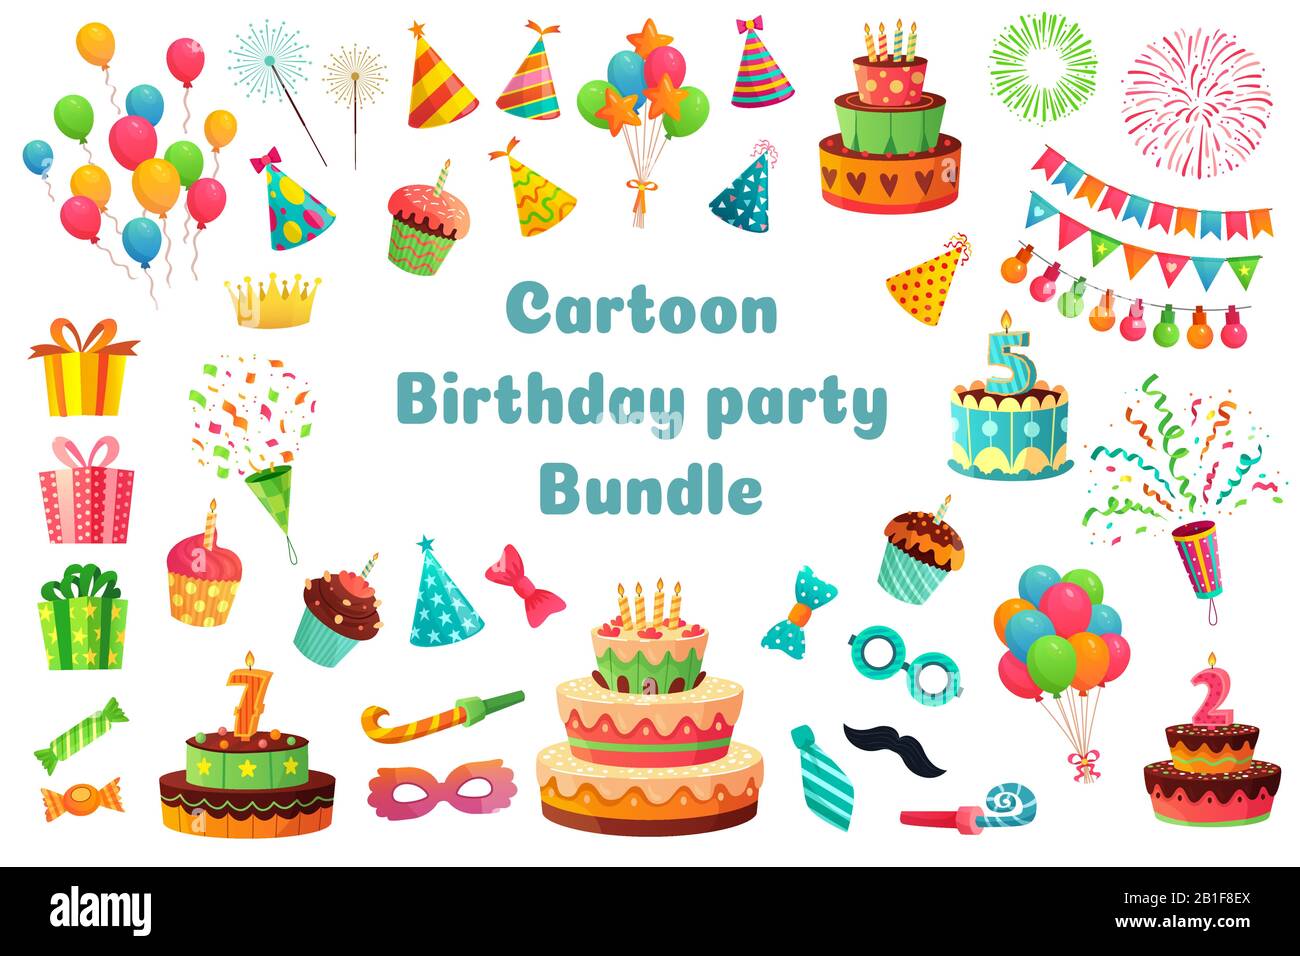 Cartoon Geburtstags-Partybündel. Süße Feier Cupcakes, bunte Ballons und Geburtstagsgeschenke Vektorgrafik-Set Stock Vektor